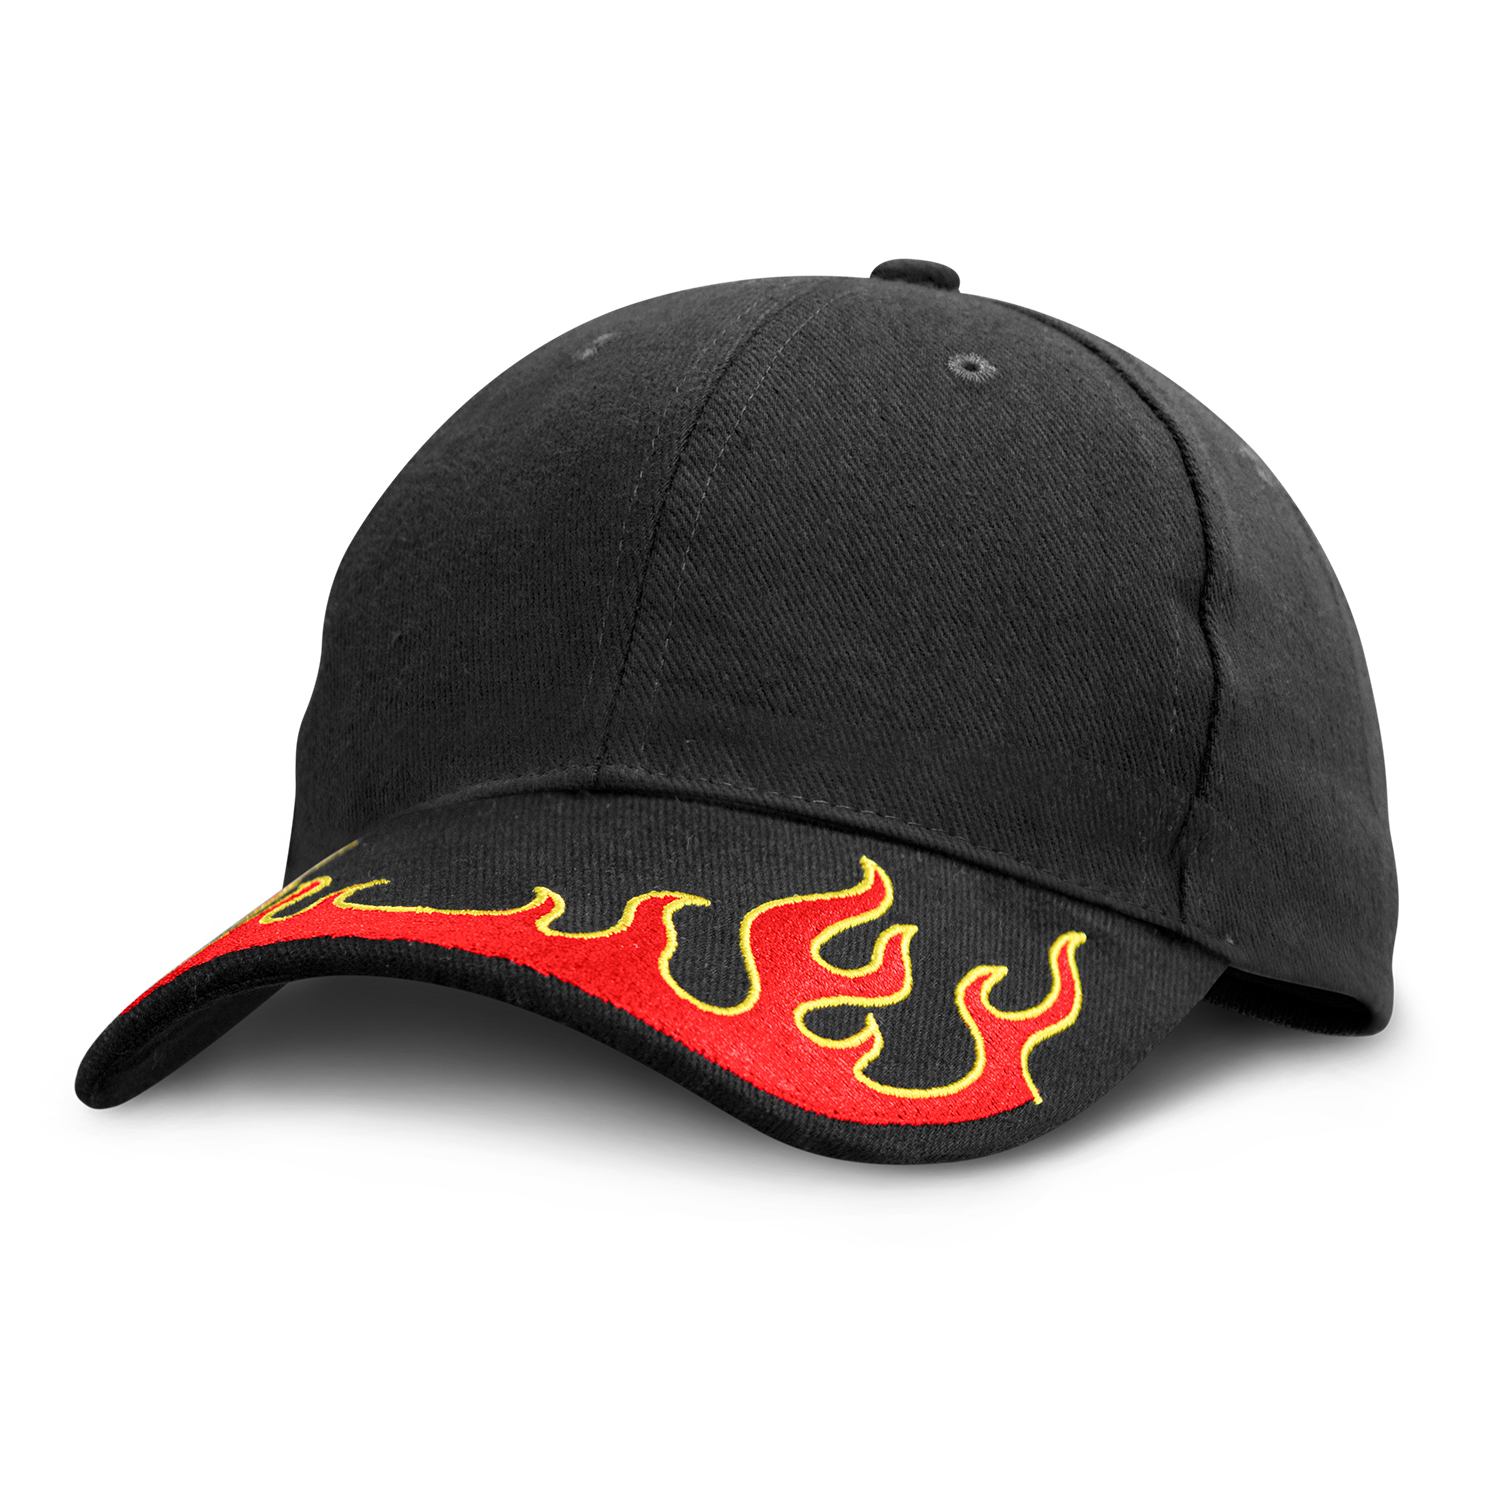 Summer Diablo Cap cap